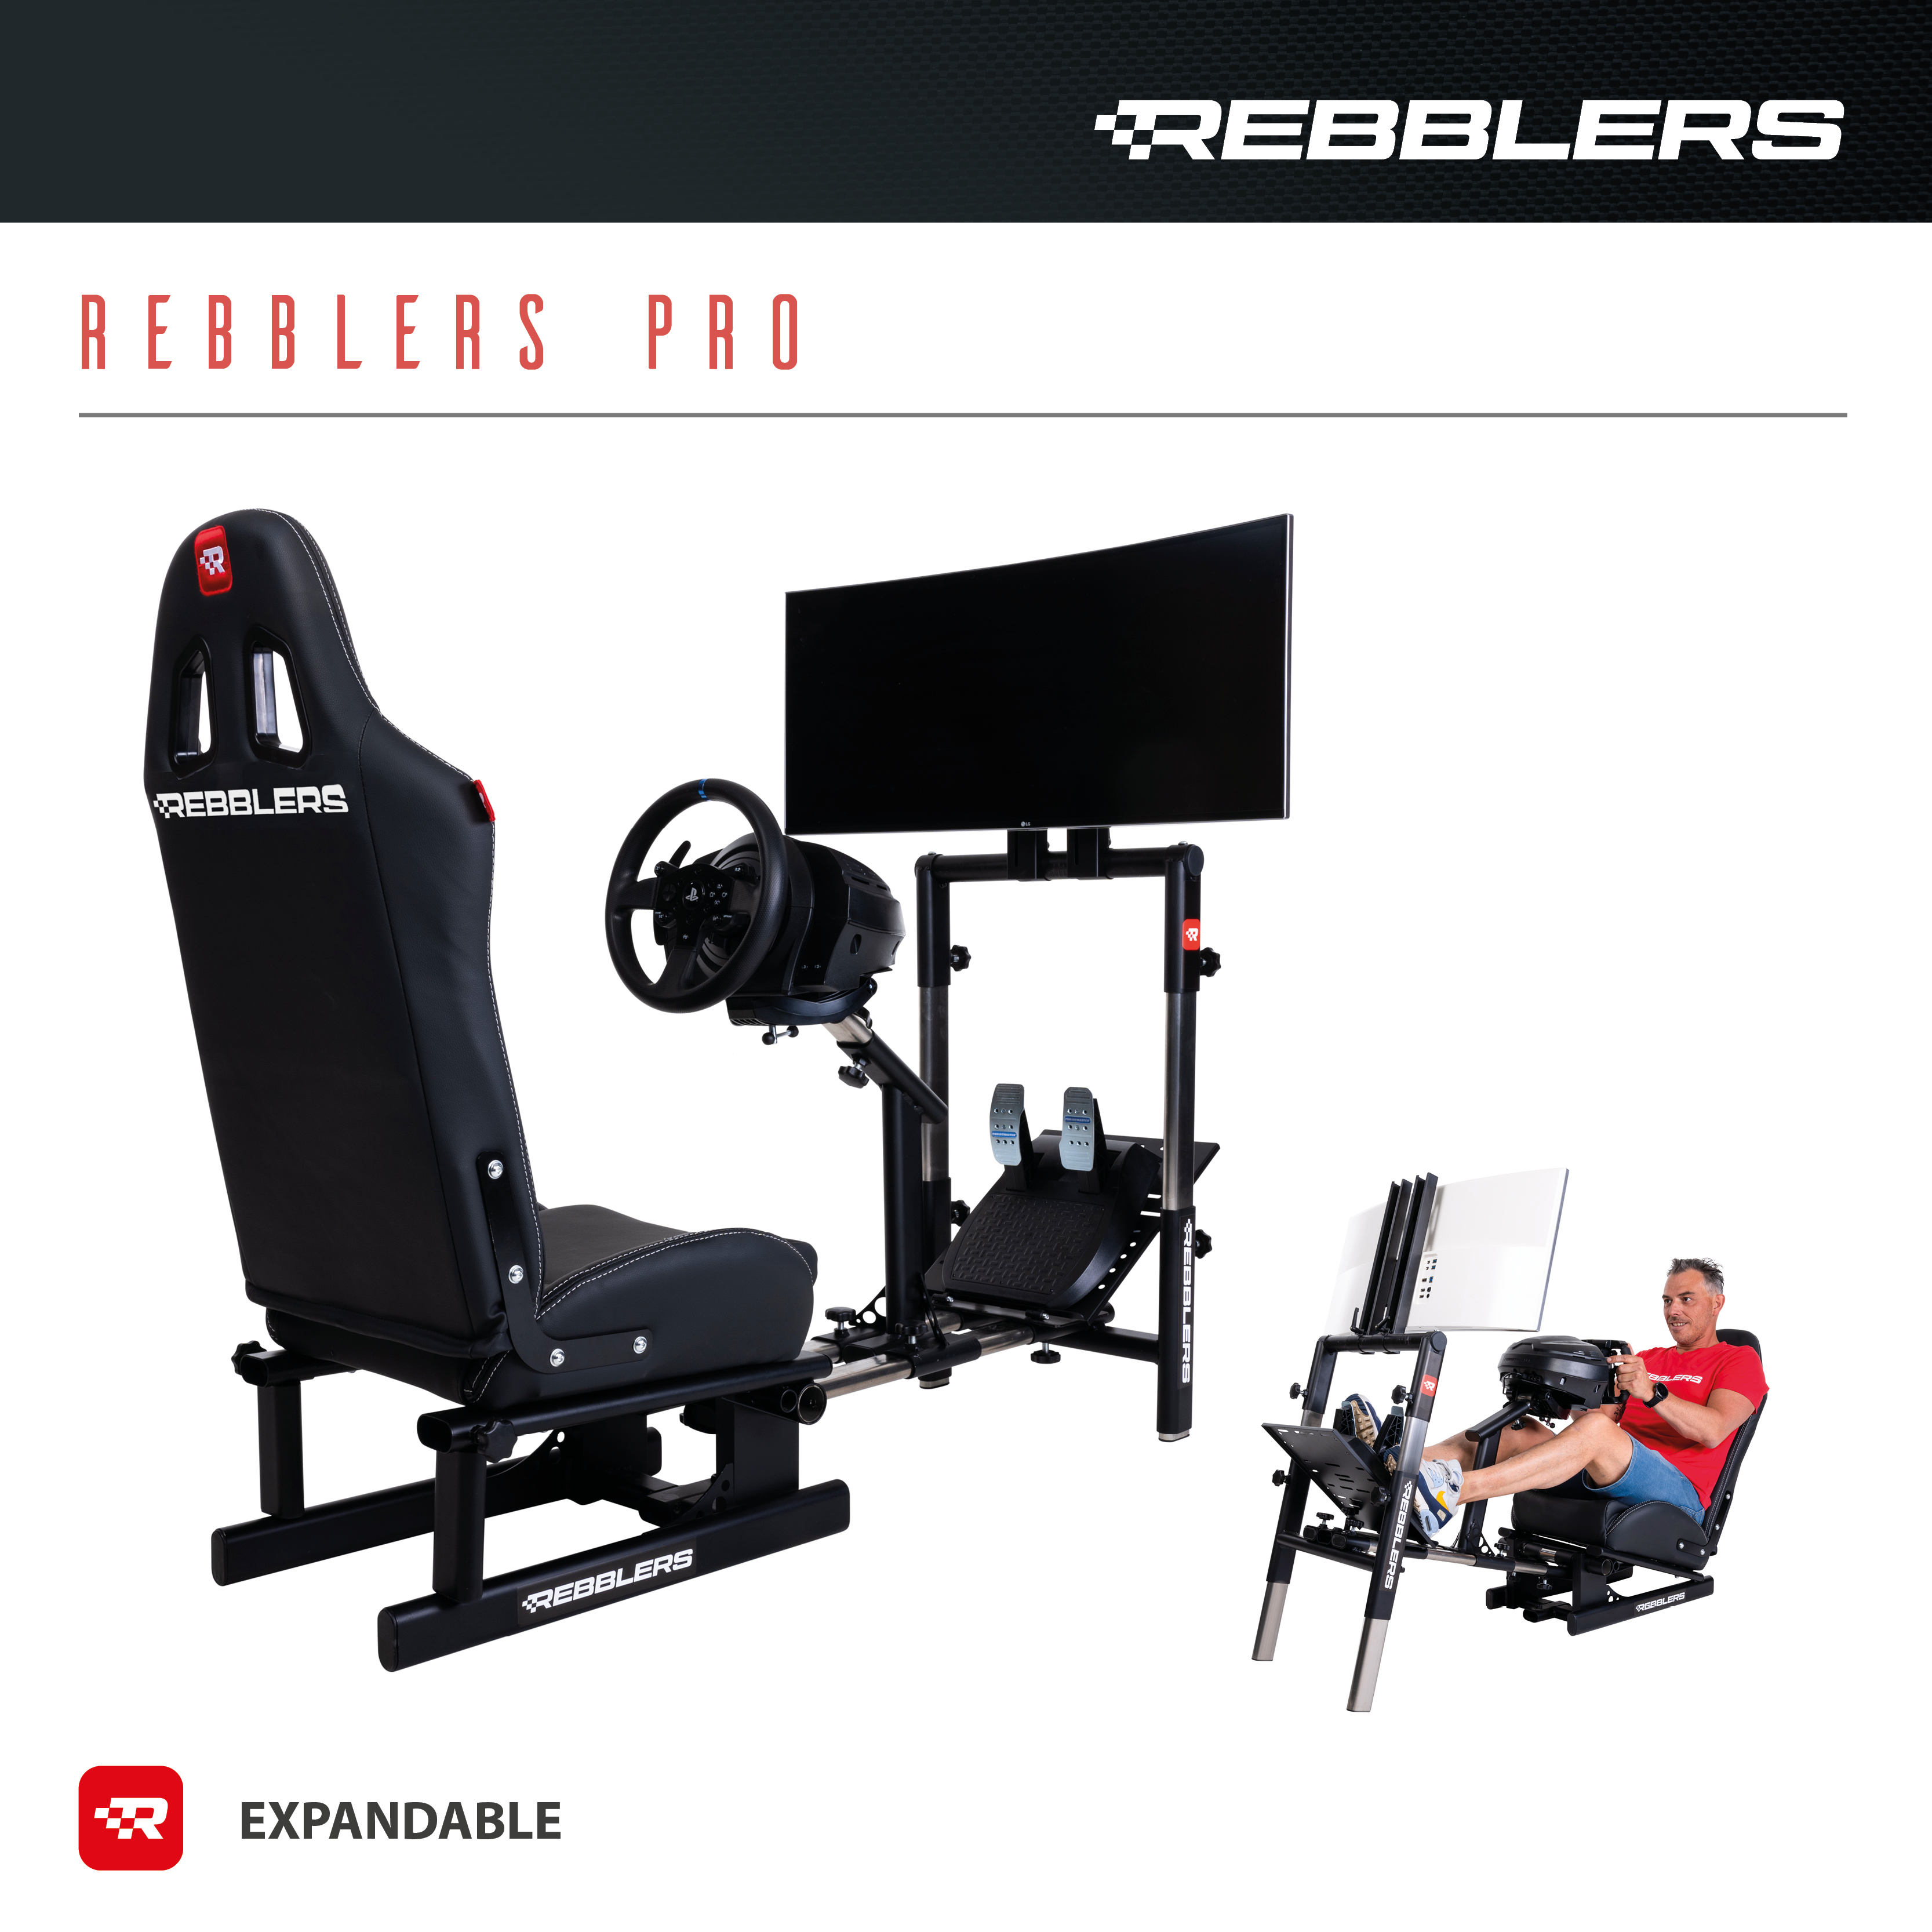 Schwarz PRO Gaming-Stuhl, REBBLERS